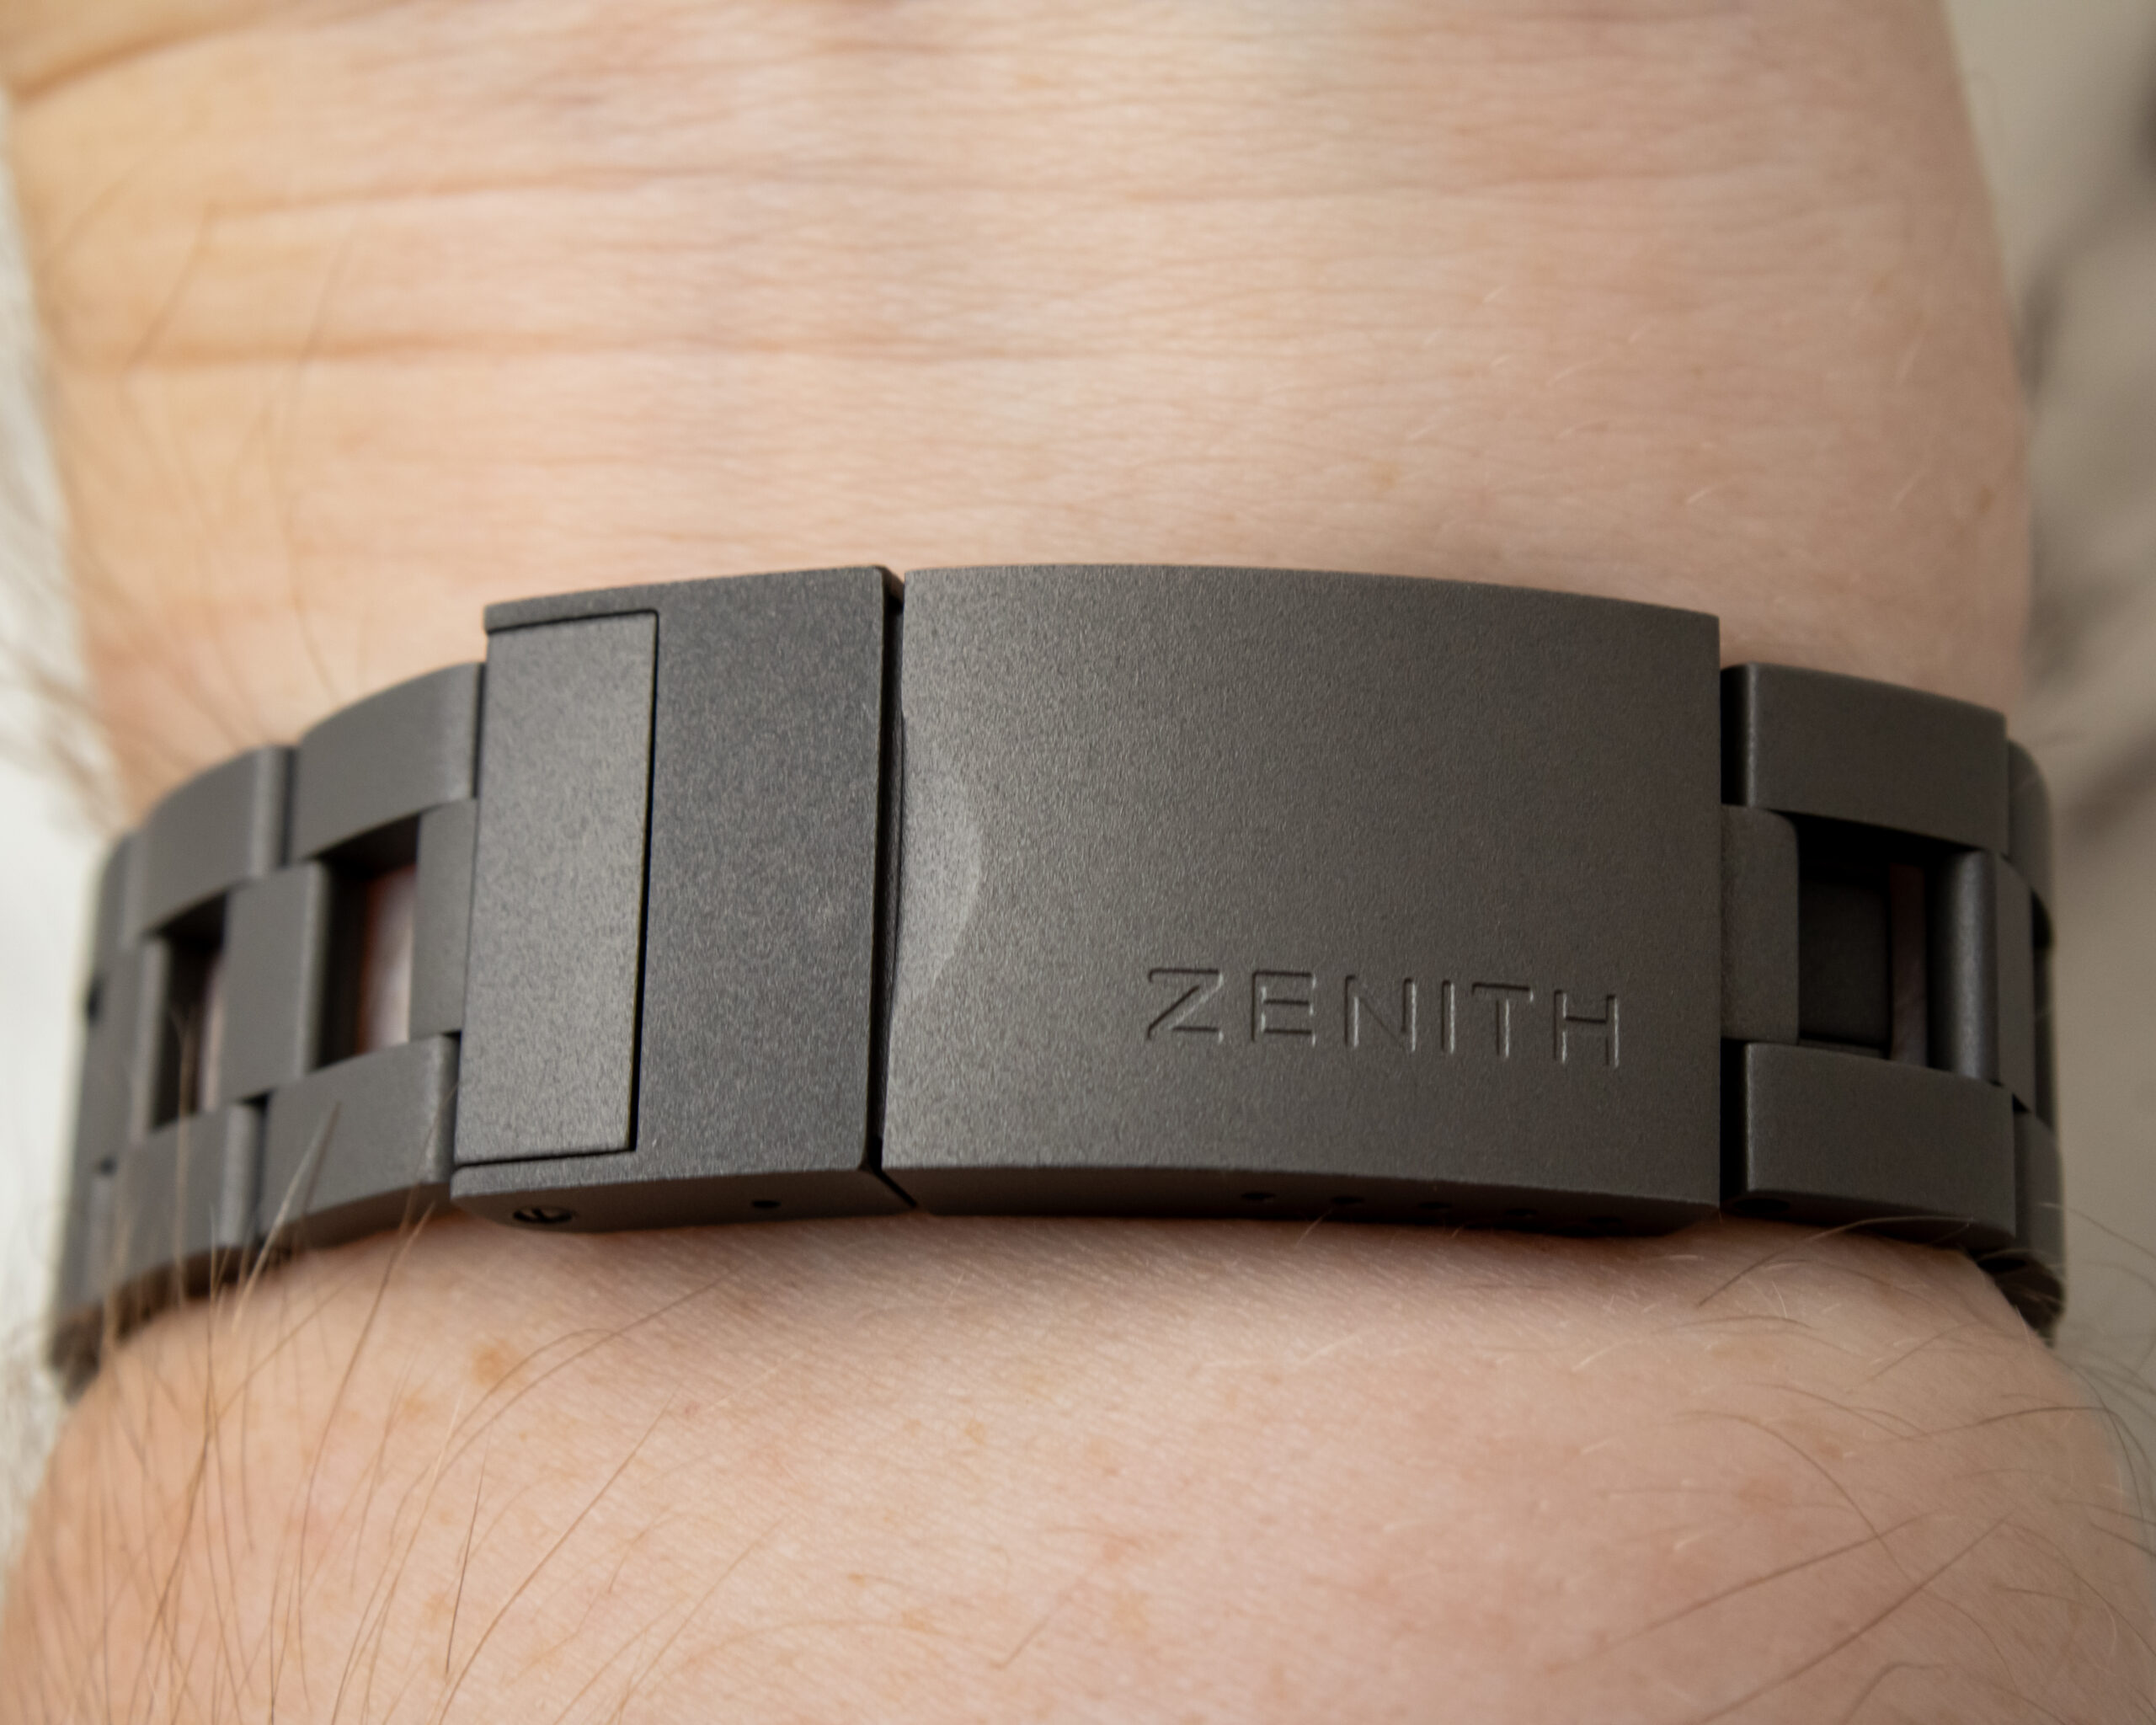 Hands-On: Zenith Defy Revival Shadow Watch